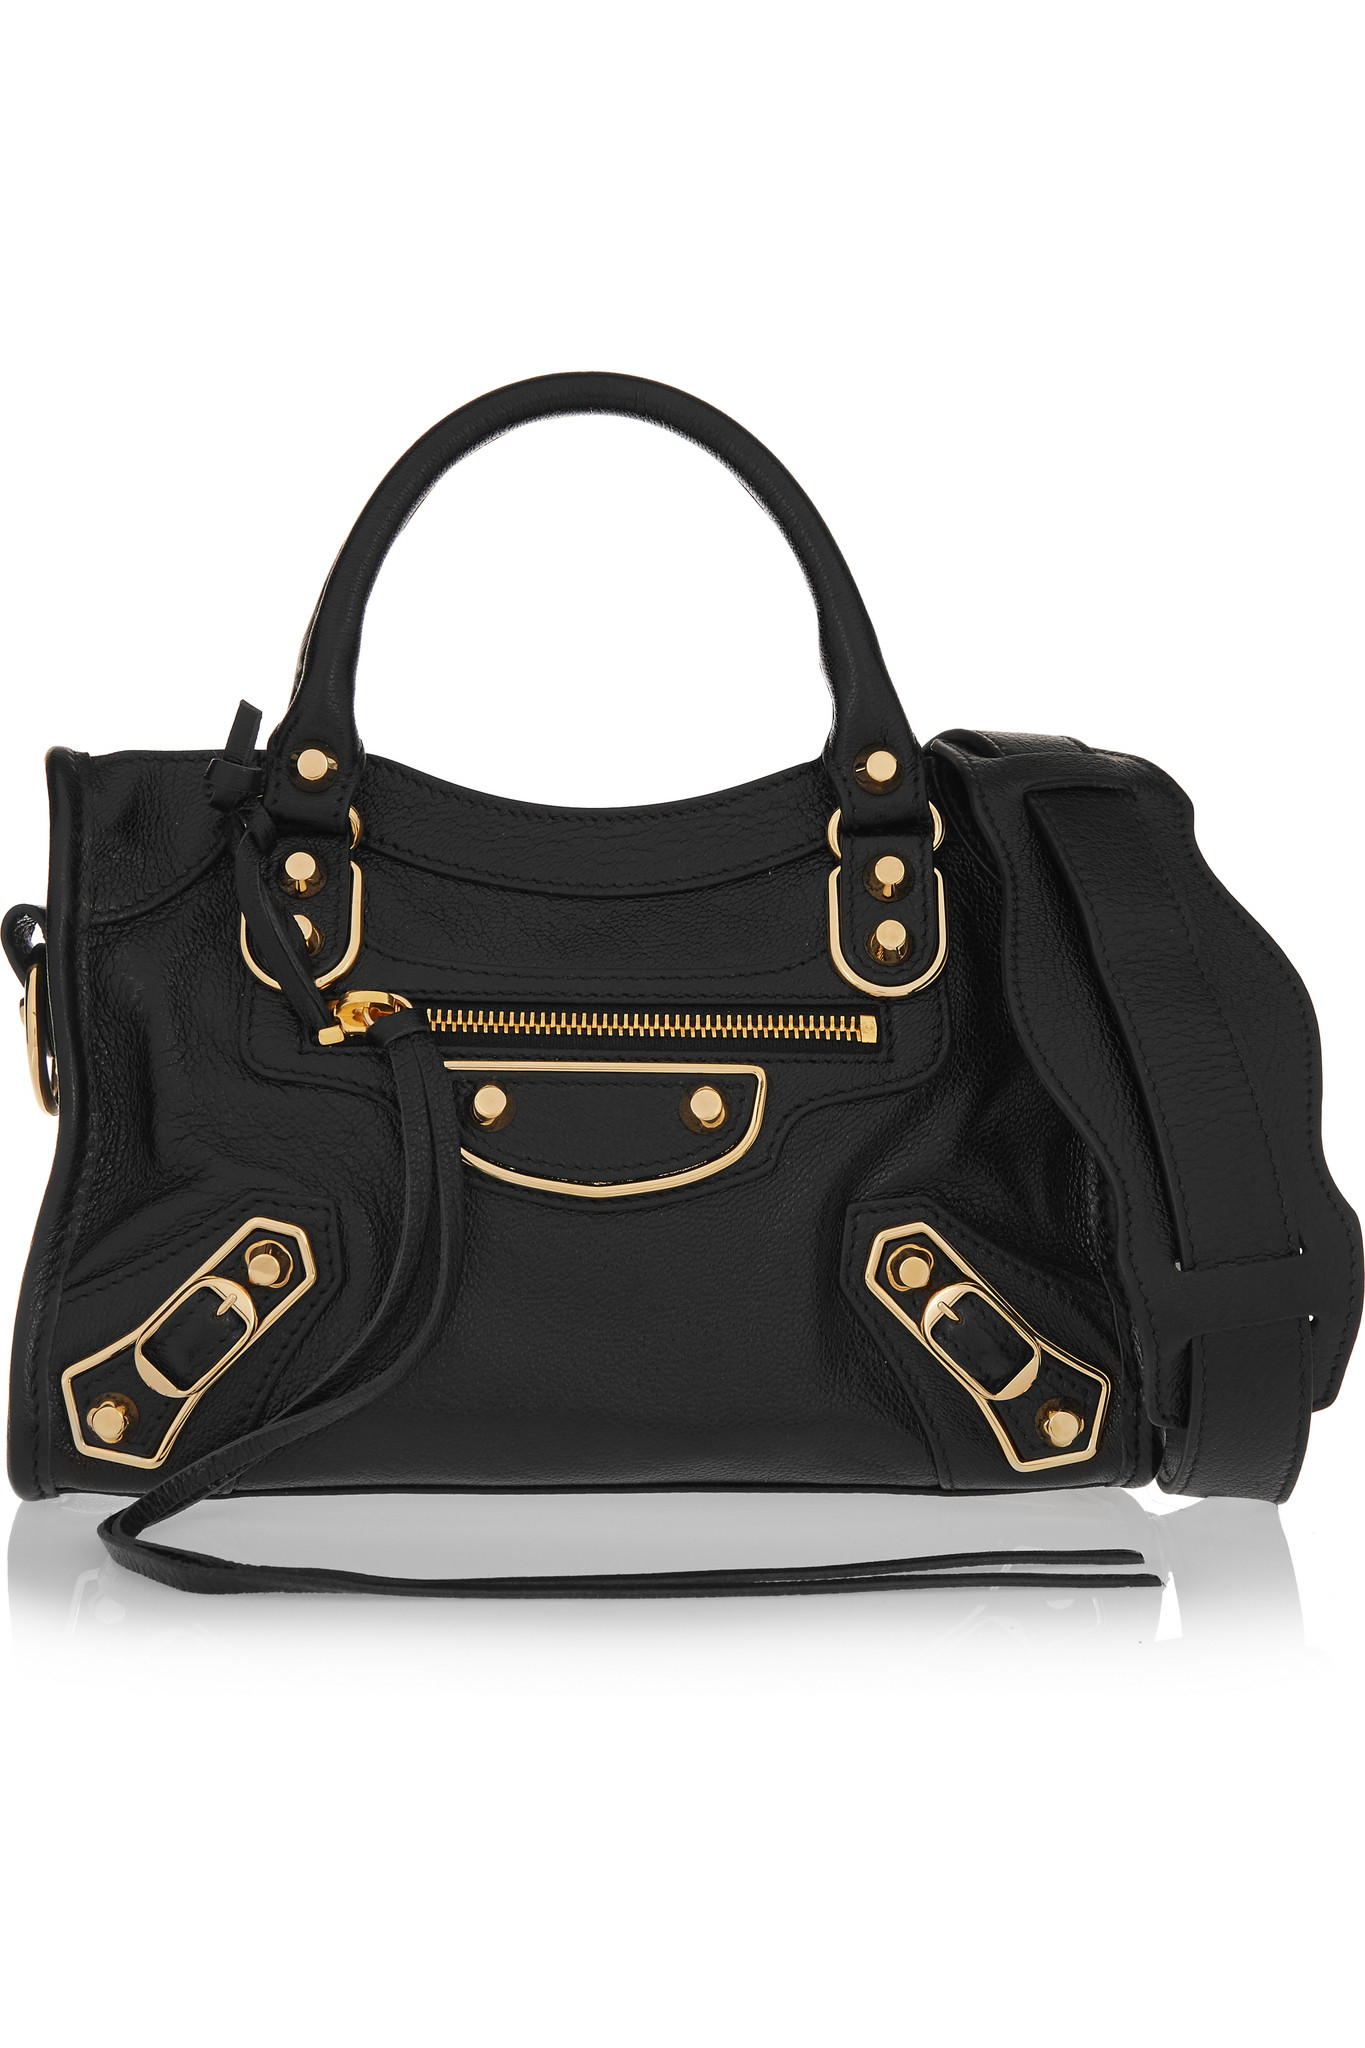 Lyst - Balenciaga Classic Metallic Edge City Mini Textured-leather Shoulder Bag in Black